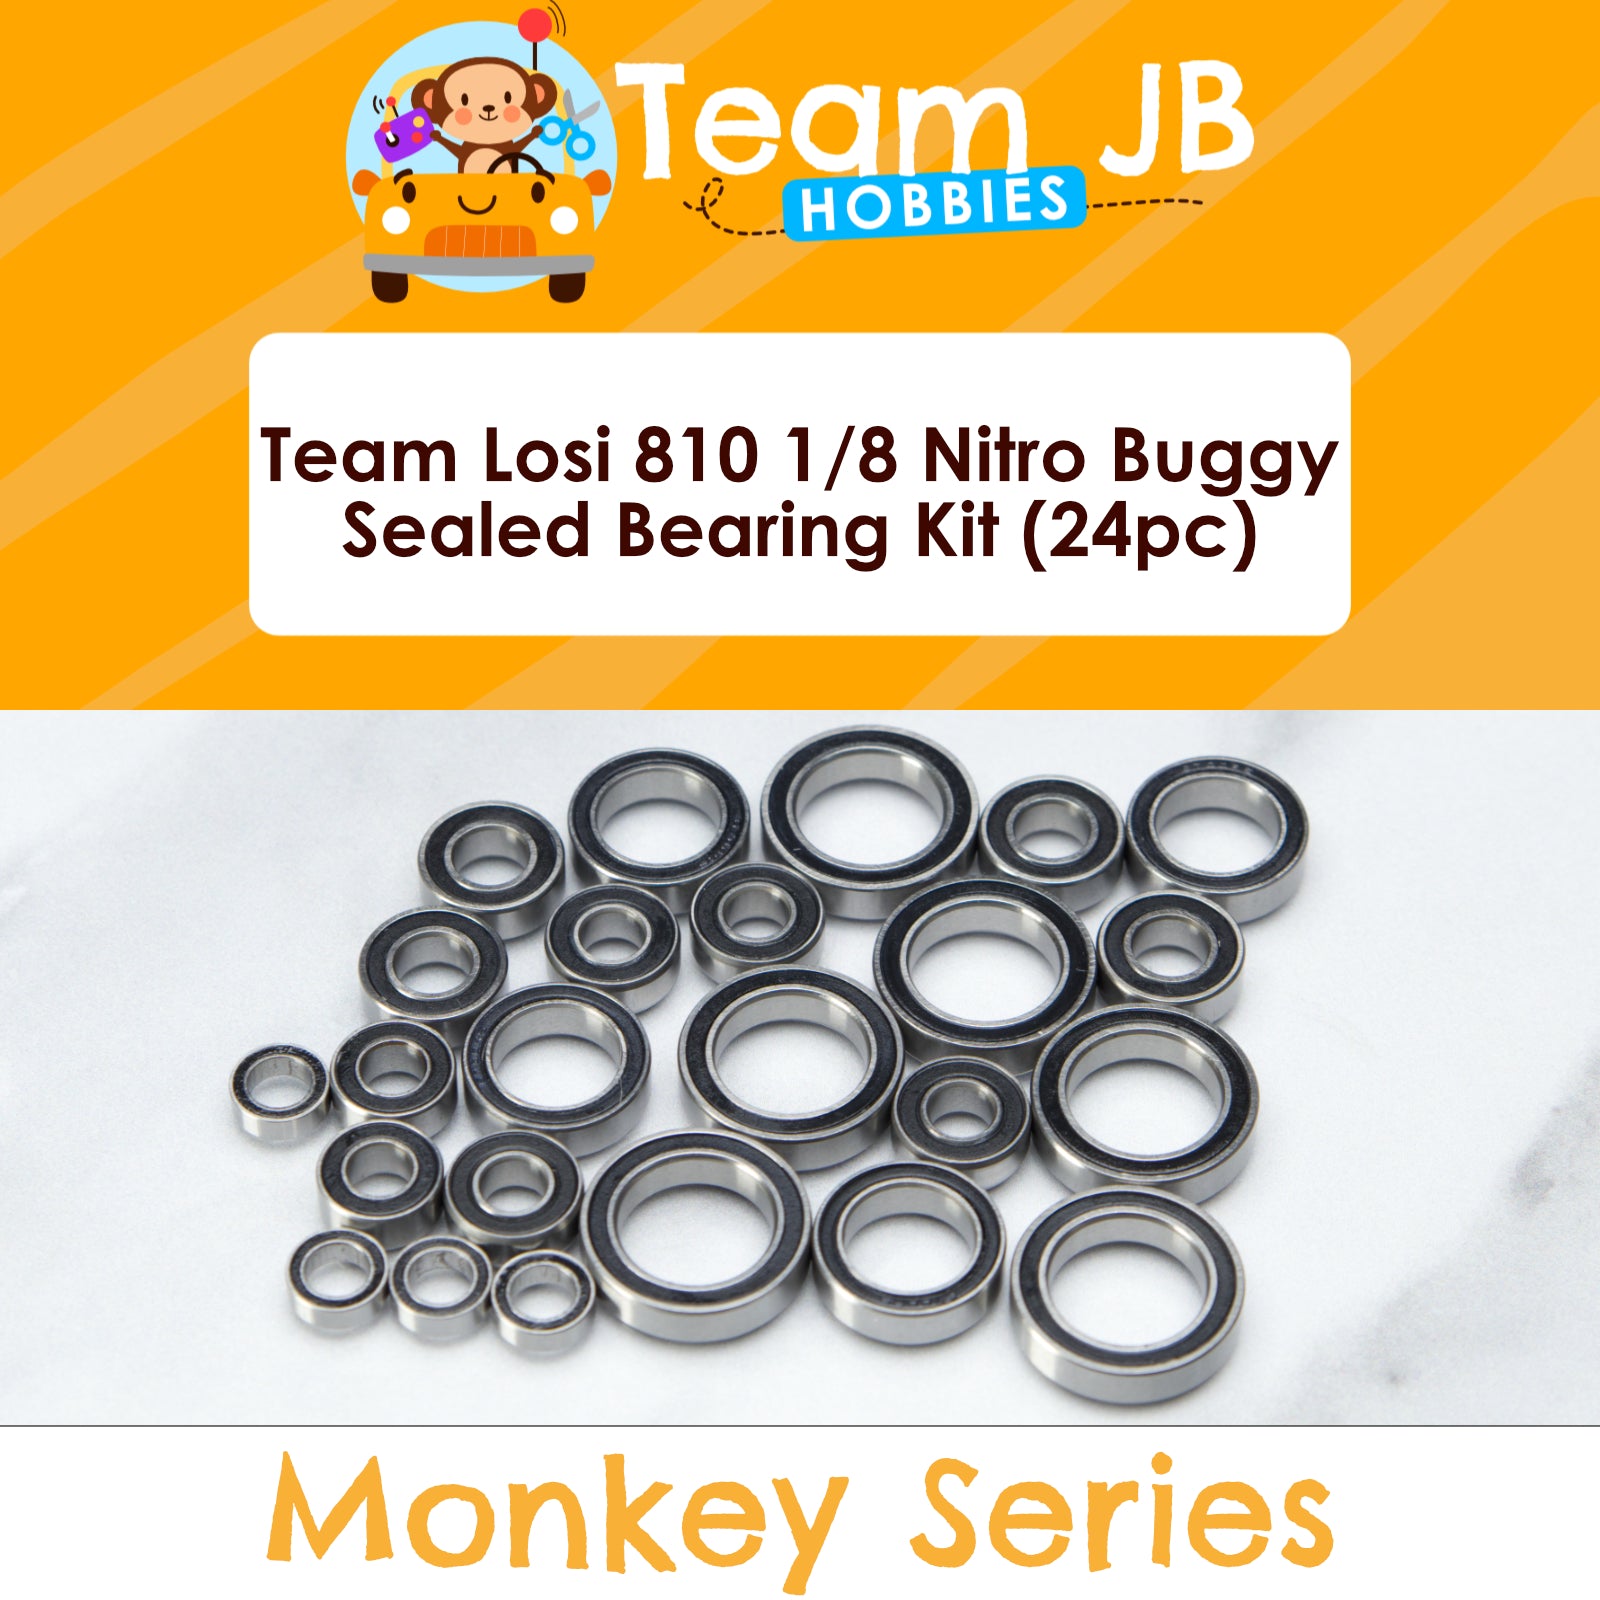 Team Losi 810 1/8 Nitro Buggy - Sealed Bearing Kit